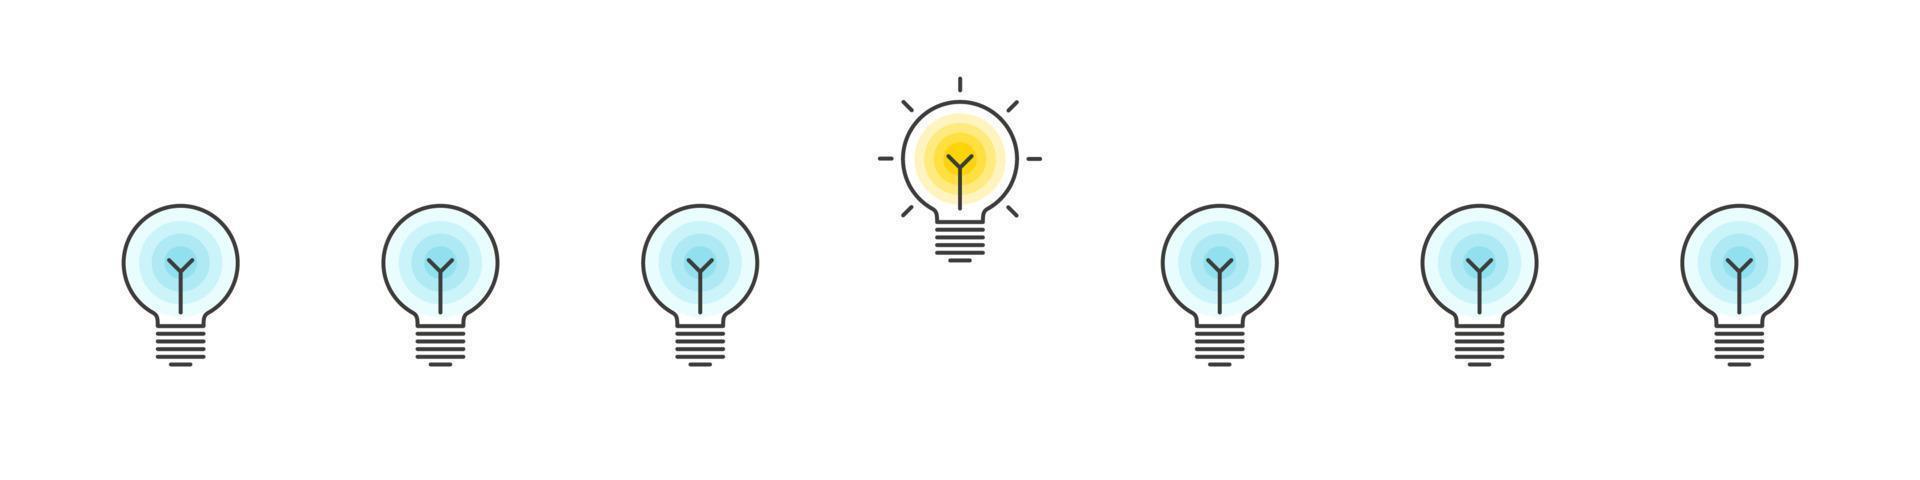 Idea lamp illustrations. Innovative idea modern stylish icon with light bulb. Different style icons set. Vector illustration